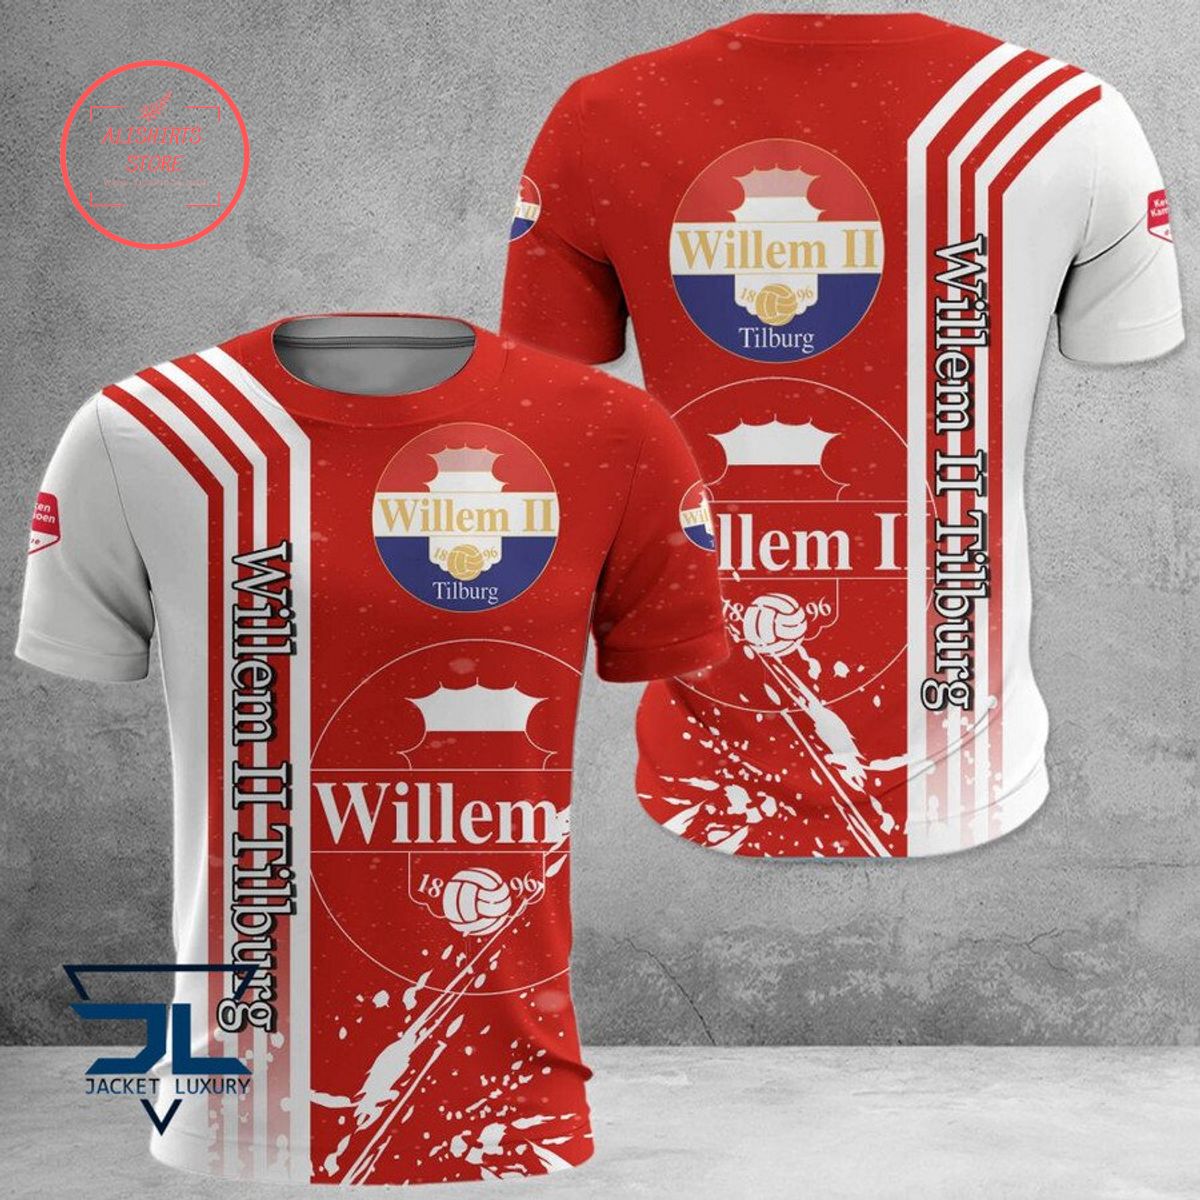 Willem II Tilburg Polo Shirt